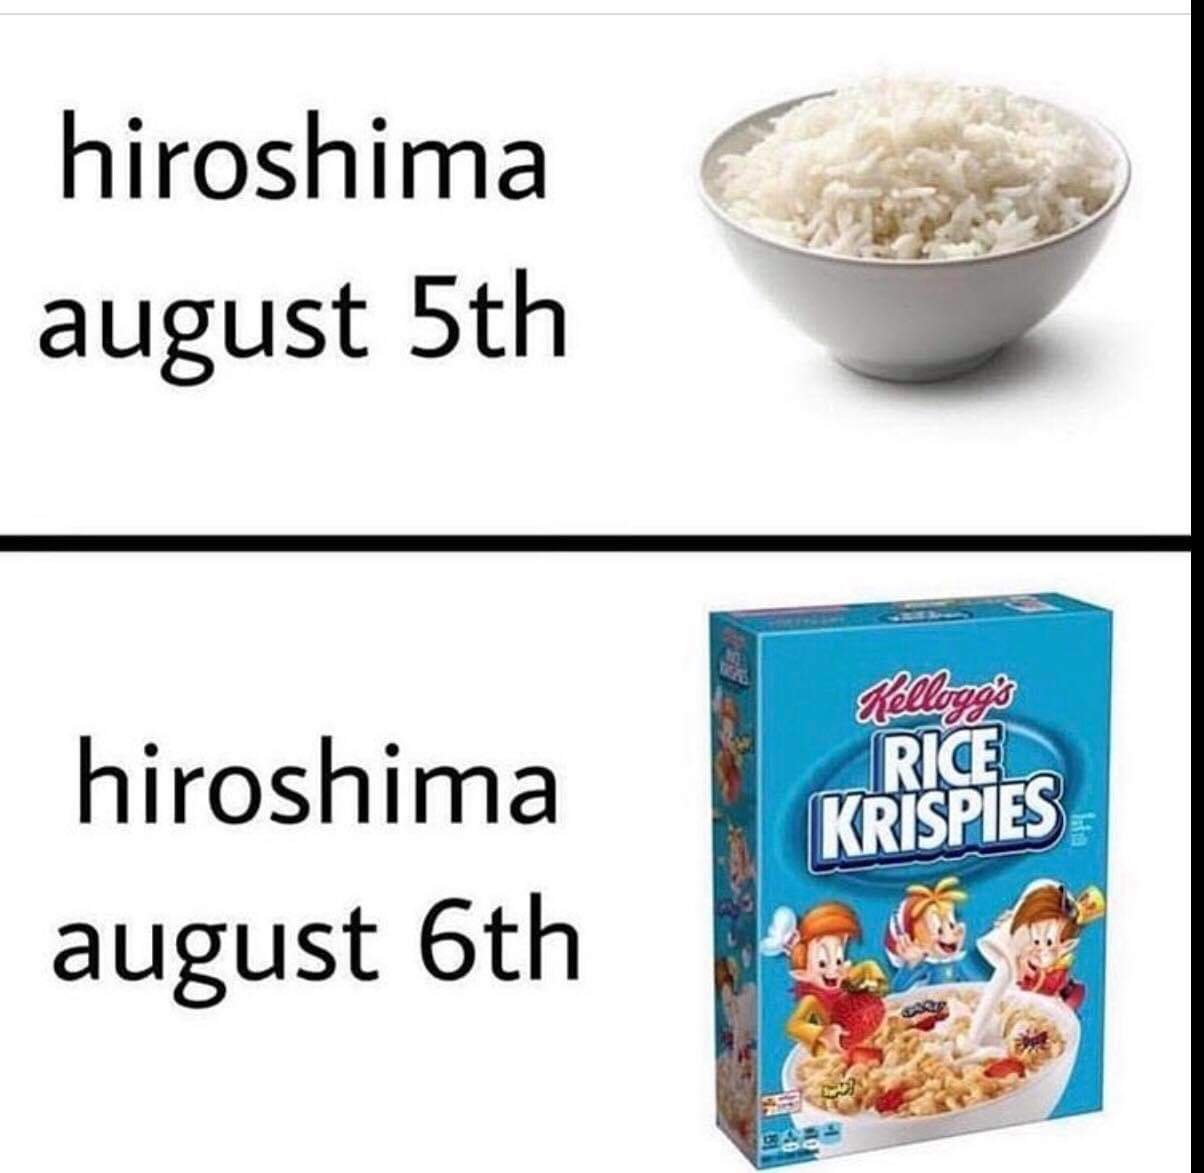 hiroshima nagasaki memes - hiroshima august 5th Kellogg's Rice Krispies hiroshima august 6th 18